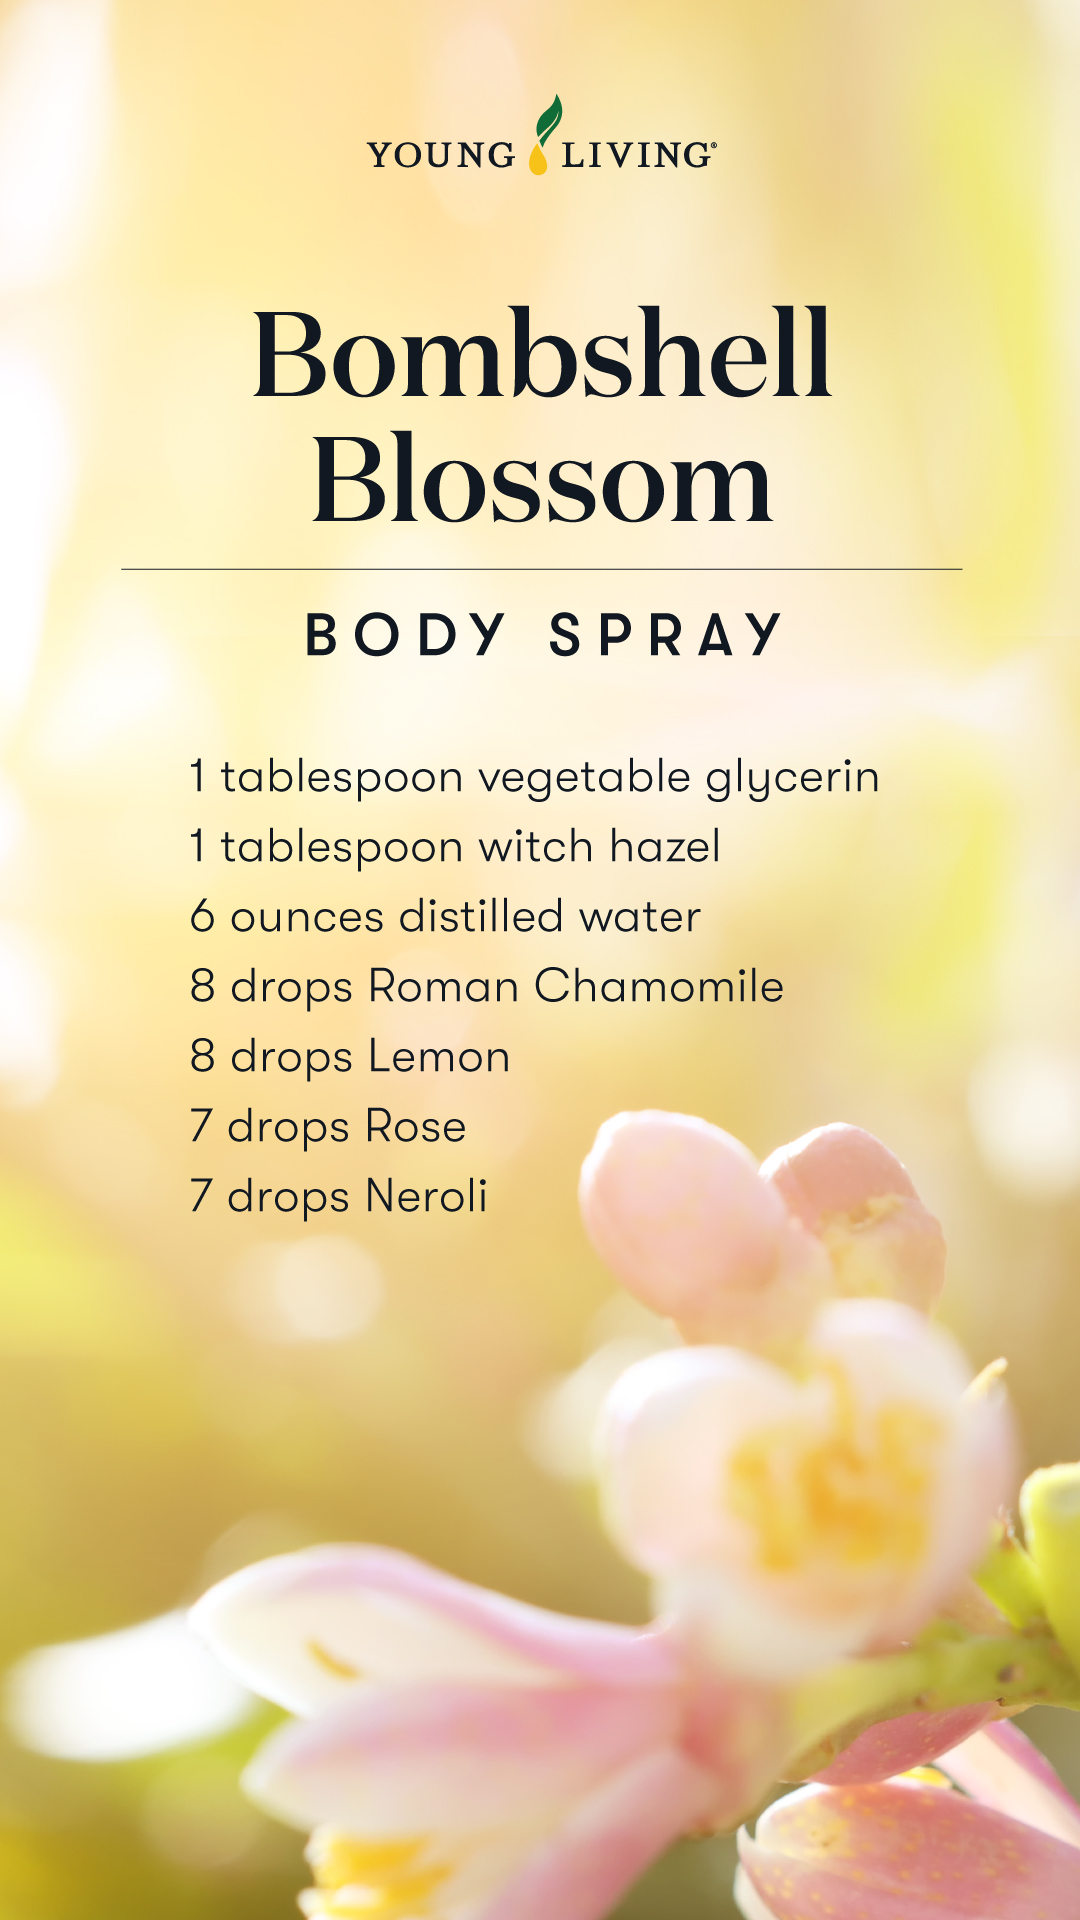 Bombshell Blossom body spray recipe - Young Living Lavender Life Blog